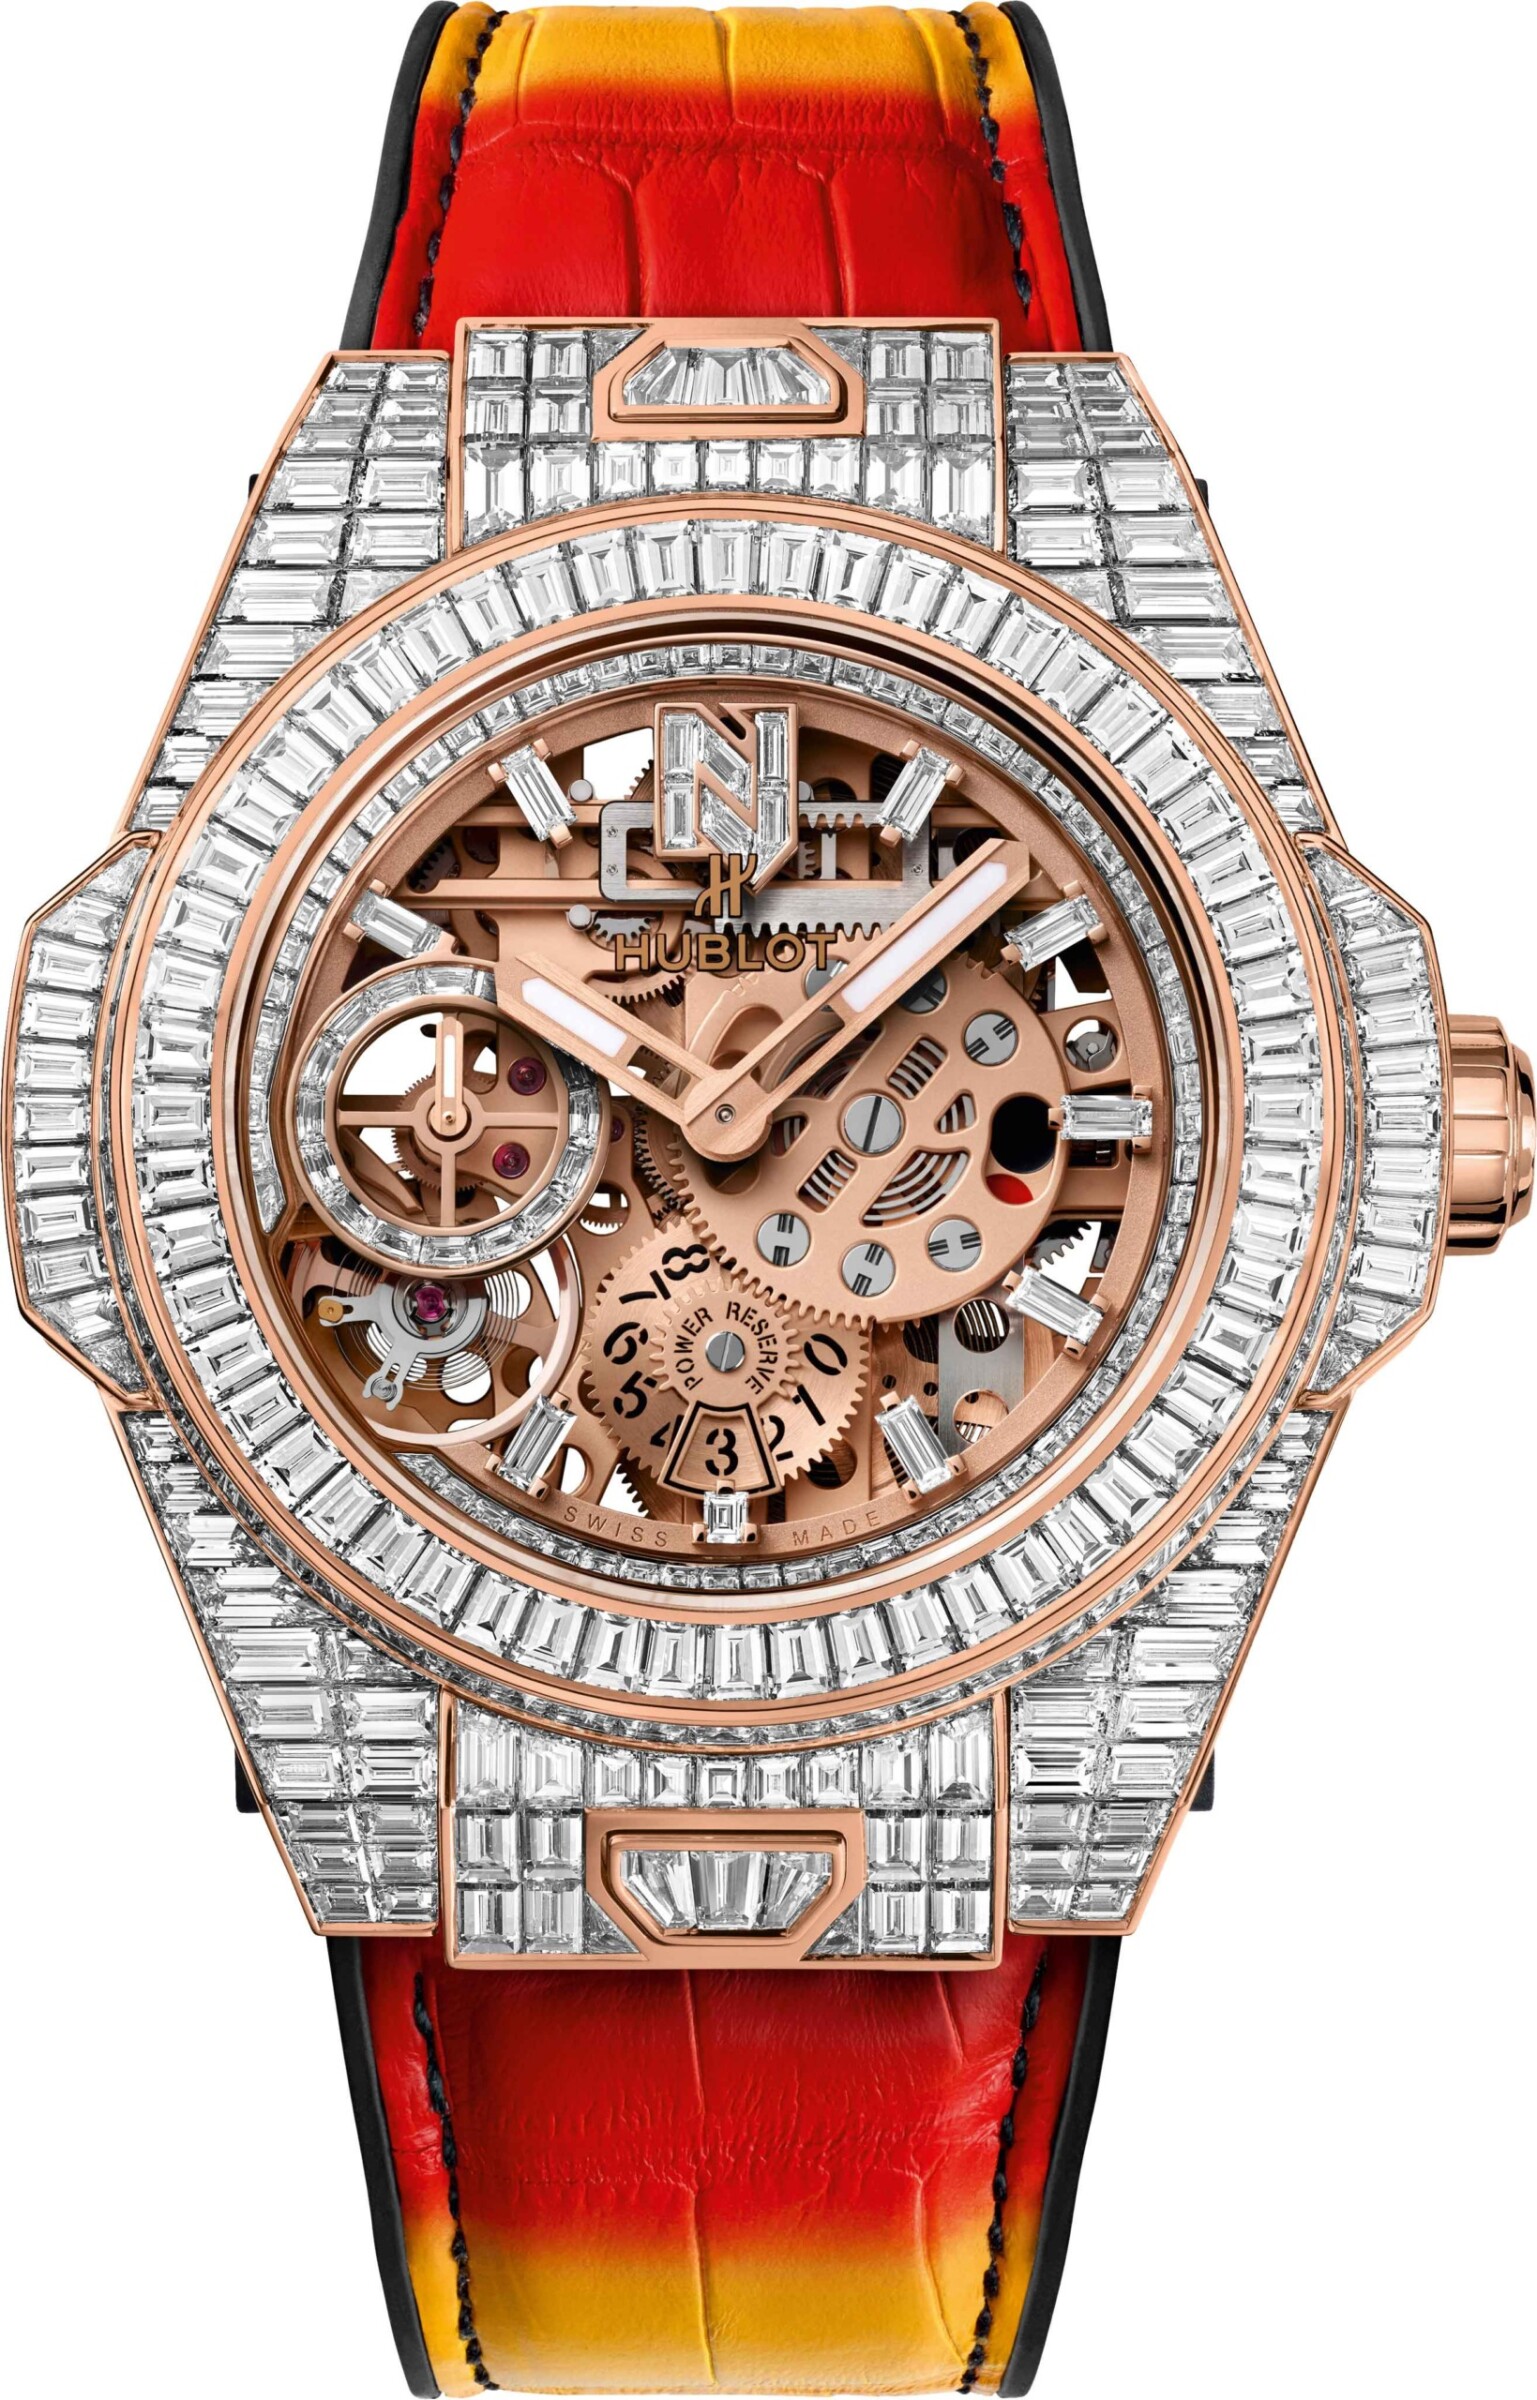 This top-of-the-range Hublot watch, Big Bang Meca-10 "Nicky Jam" high jewellery 45 mm, costs CHF 350,000.